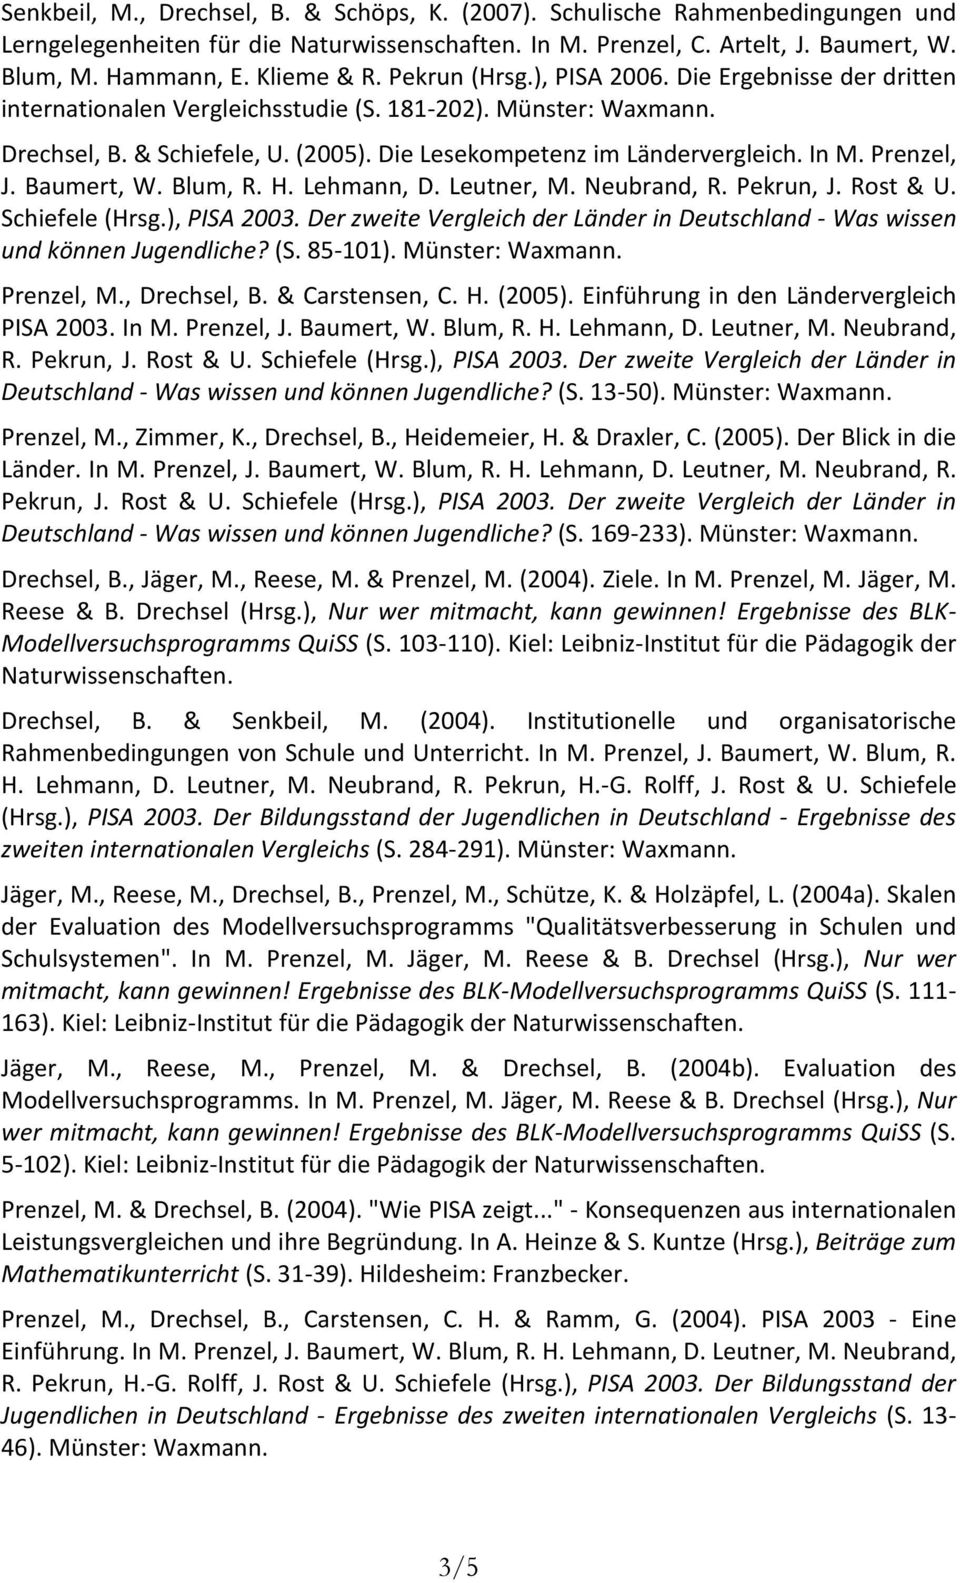 In M. Prenzel, J. Baumert, W. Blum, R. H. Lehmann, D. Leutner, M. Neubrand, R. Pekrun, J. Rost & U. Schiefele (Hrsg.), PISA 2003.